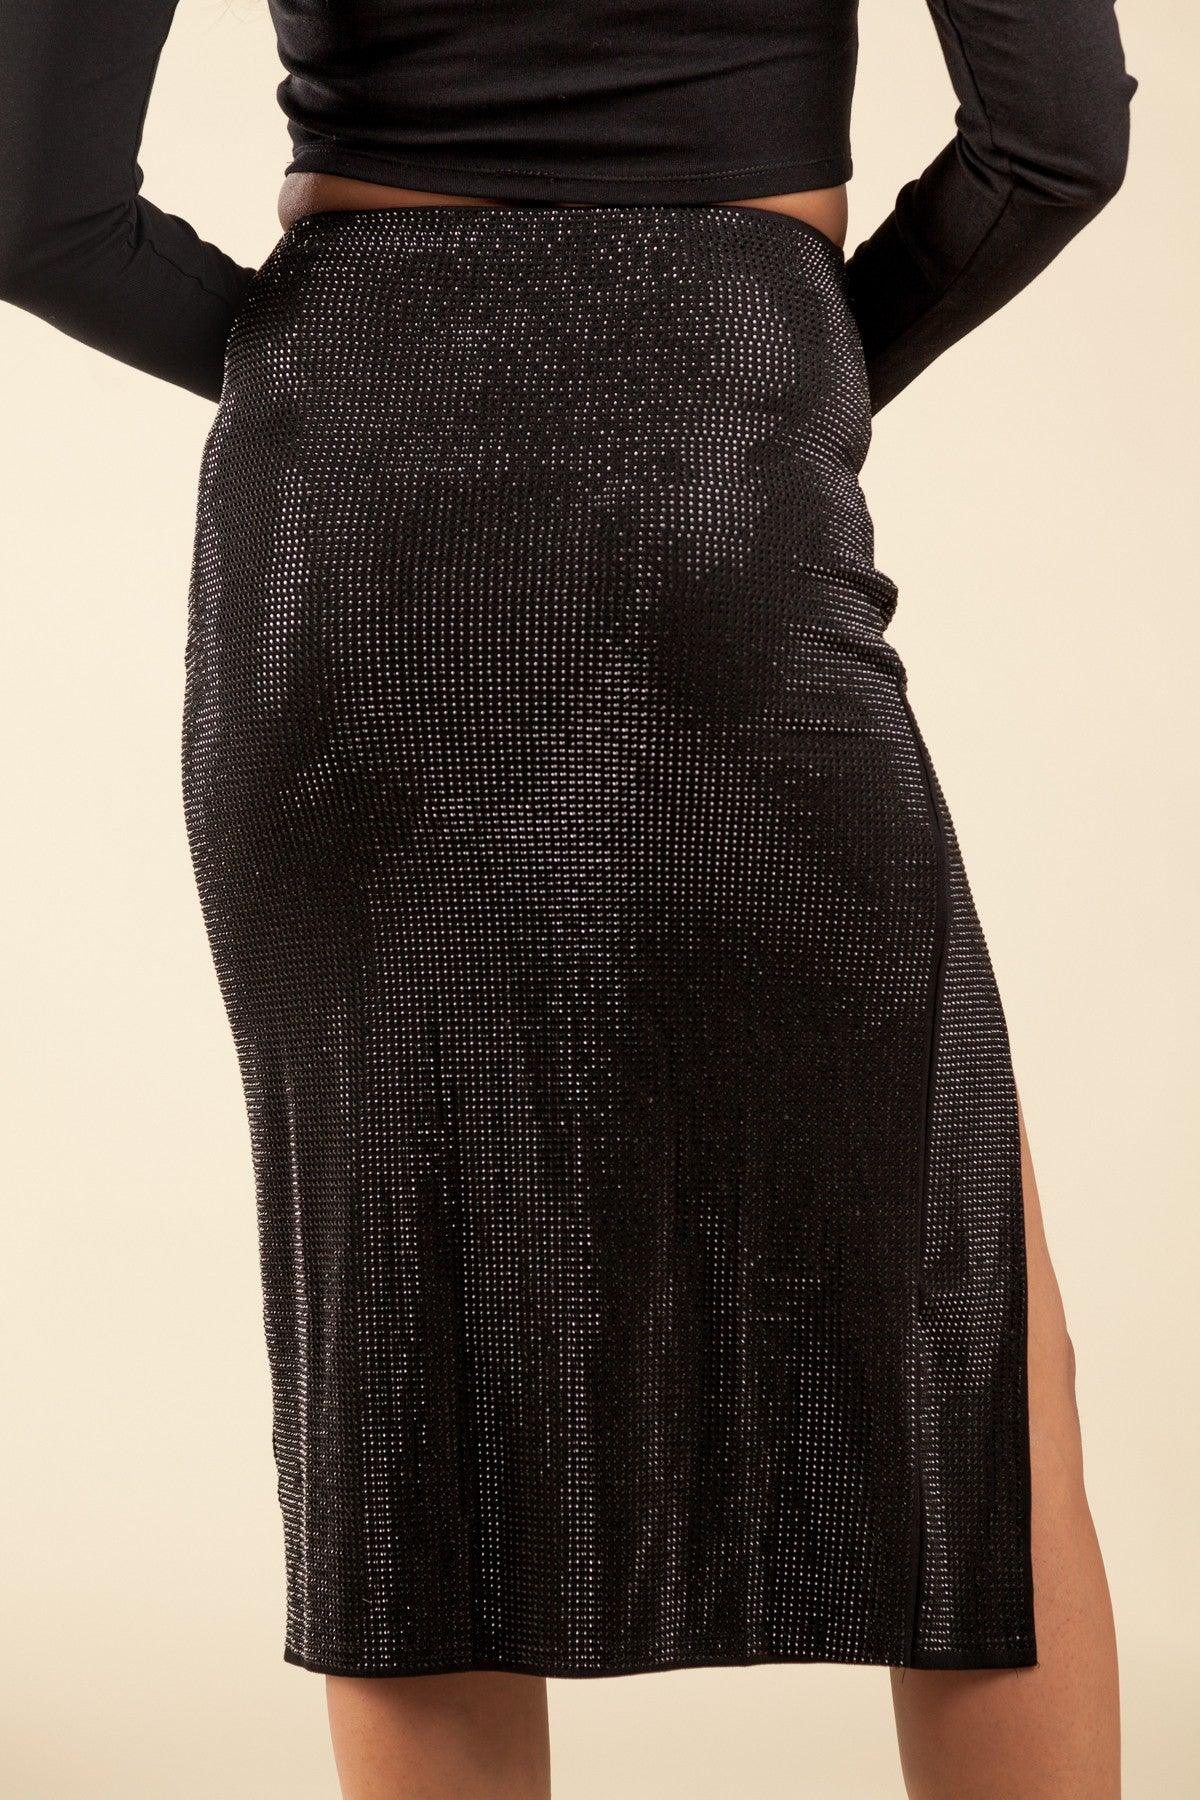 high waisted studded skirt w/side slit